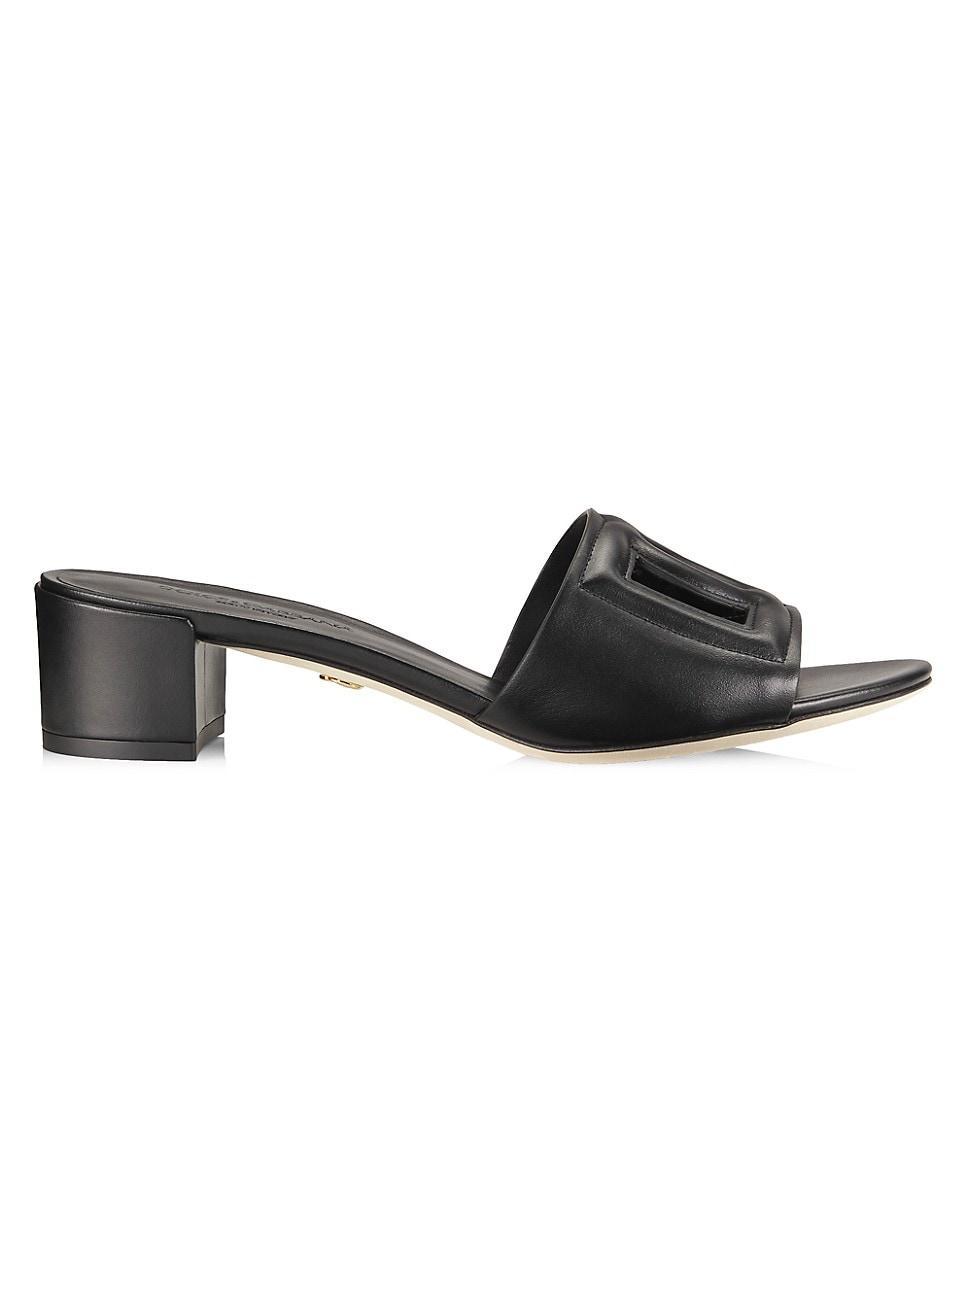 Dolce & Gabbana Interlock Slide Sandal Product Image